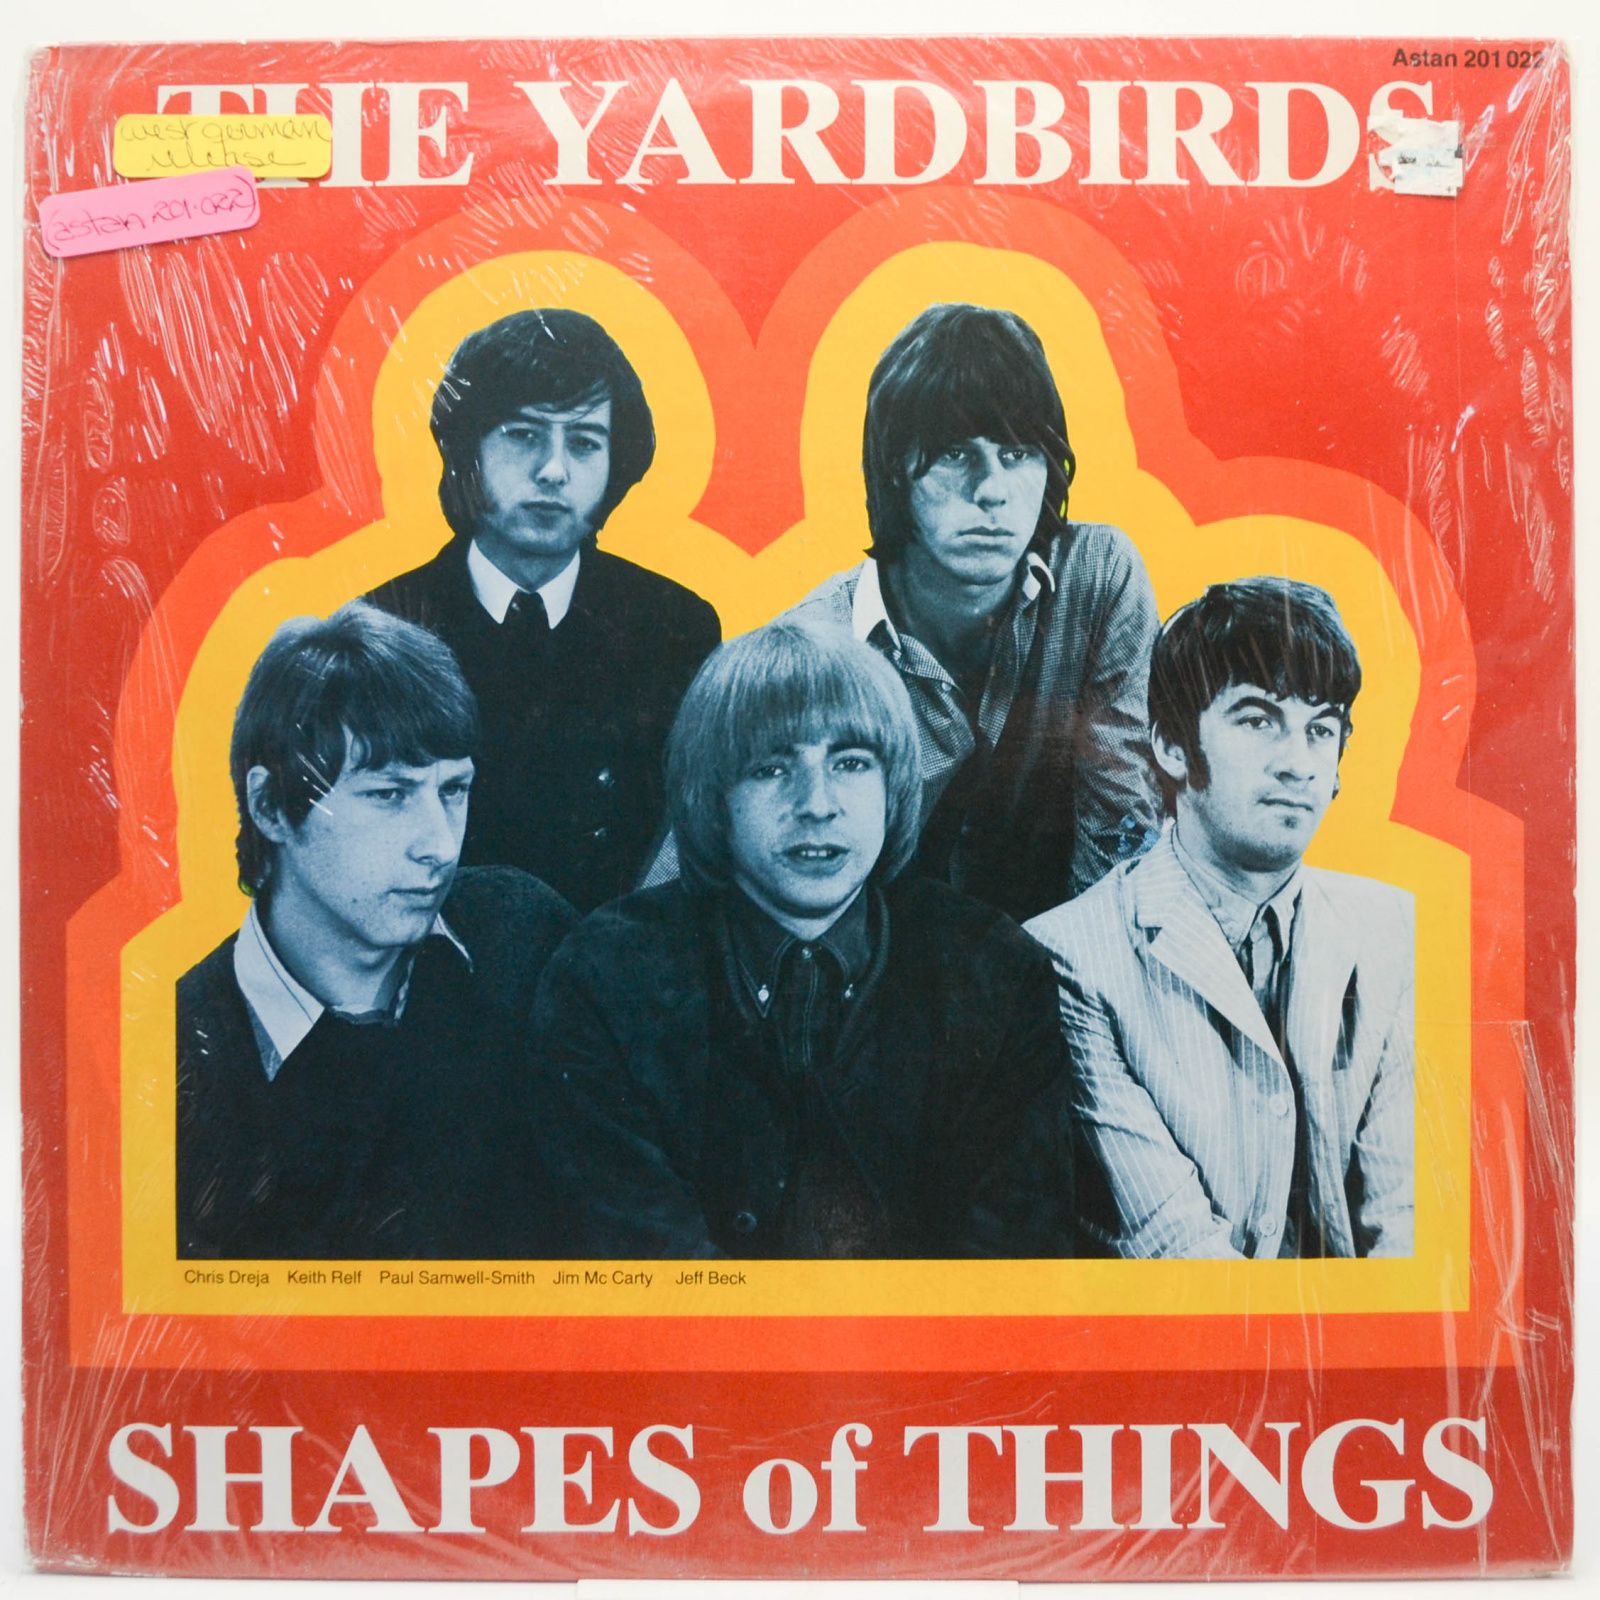 Yardbirds — Shapes Of Things, 1981